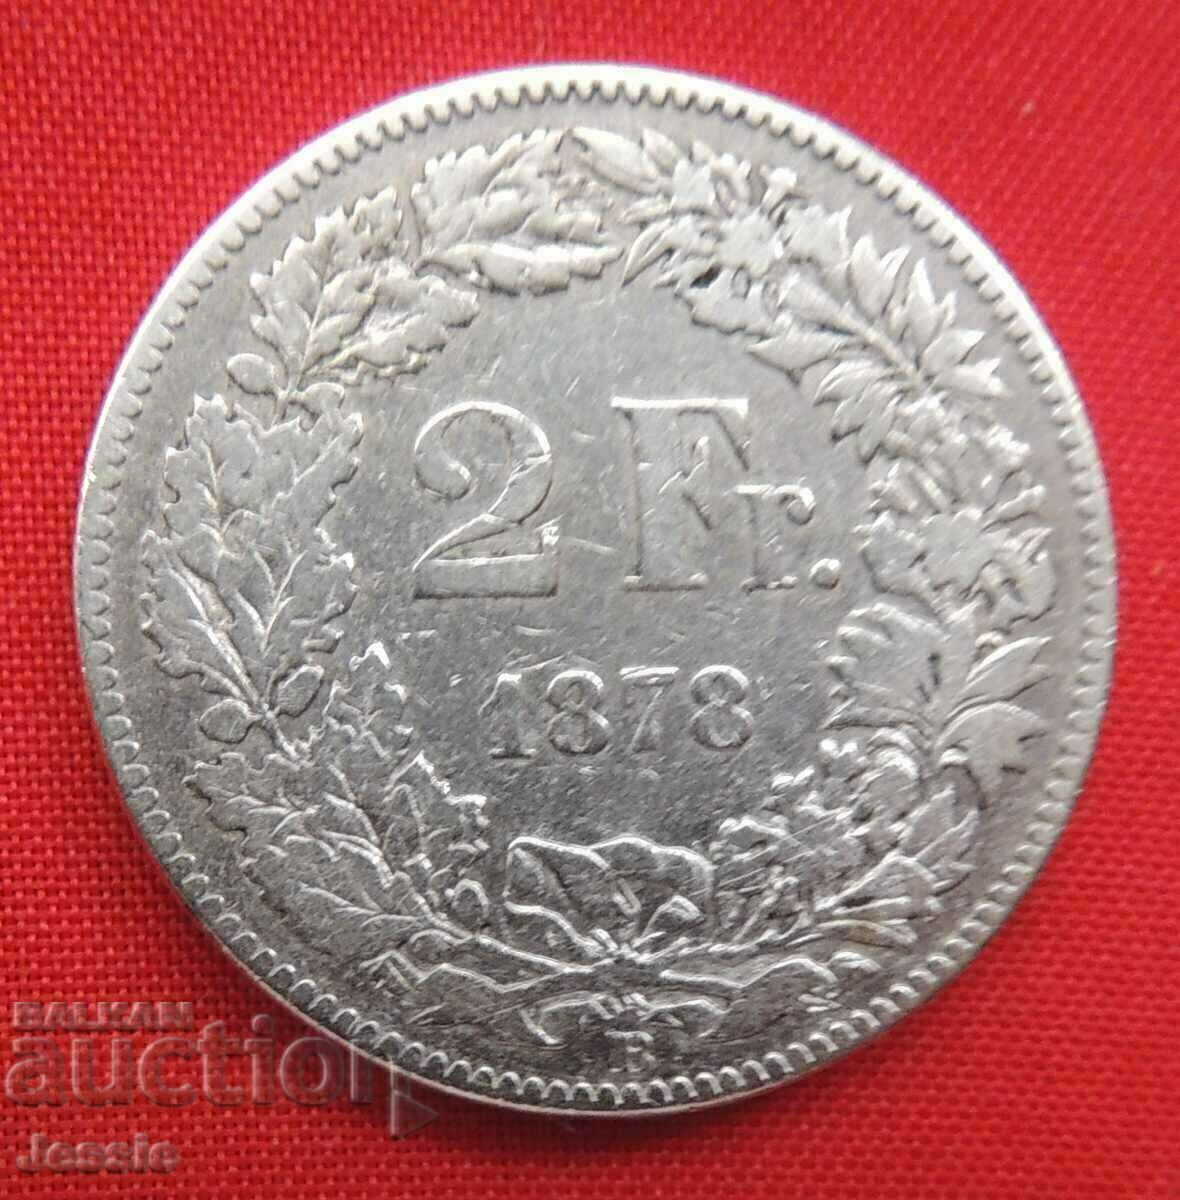 2 Francs 1878 B Switzerland Silver